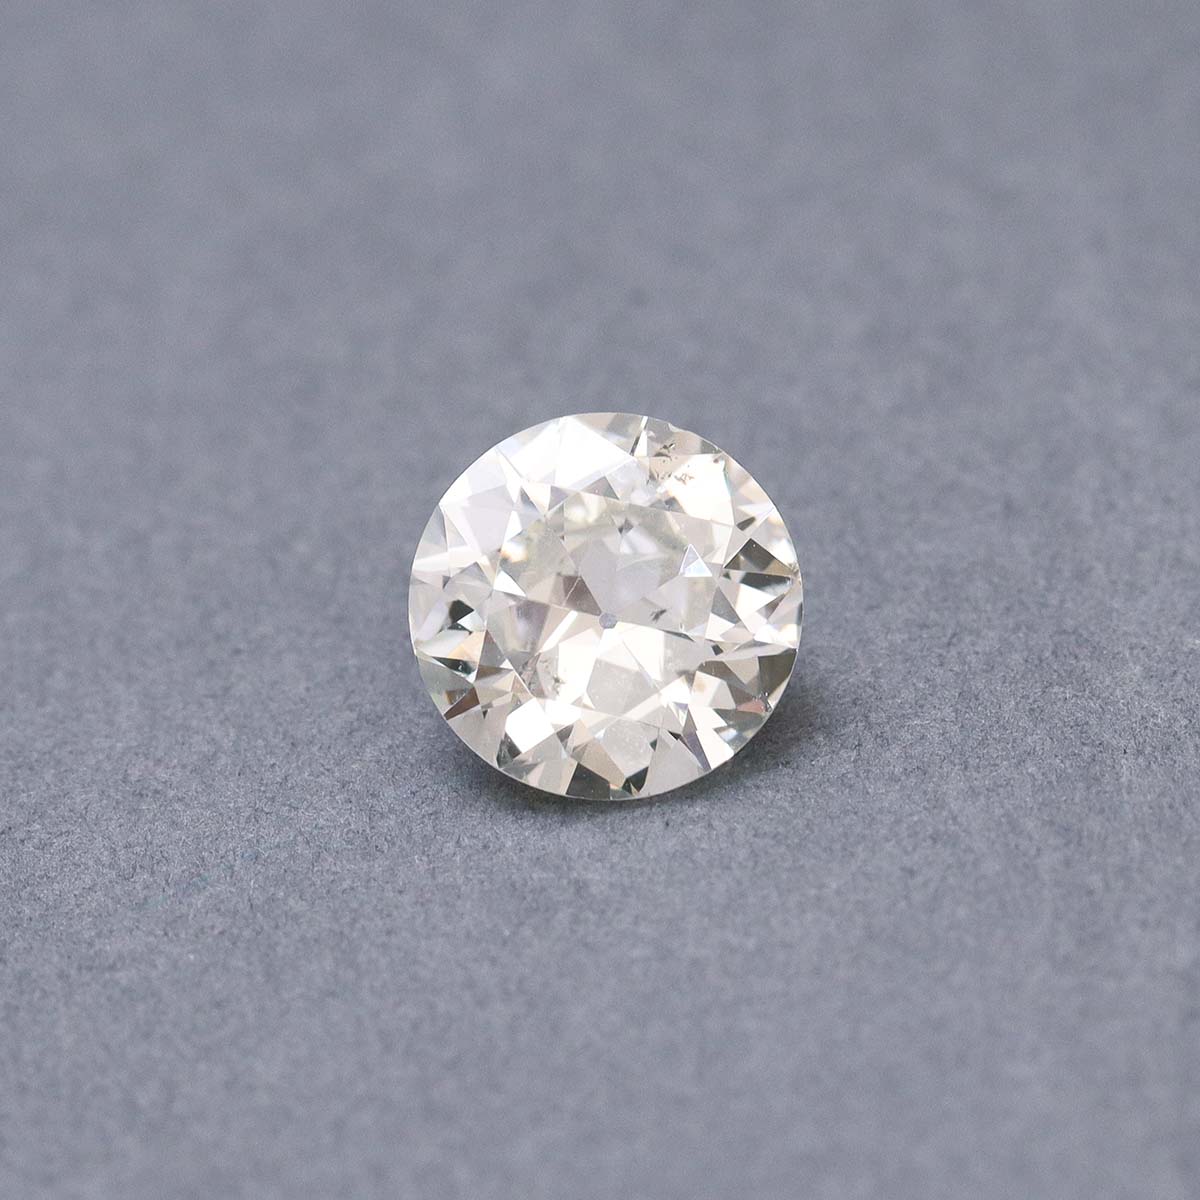 Old European Cut Diamond 3.01 carats L SI2 GIA #D230602-4